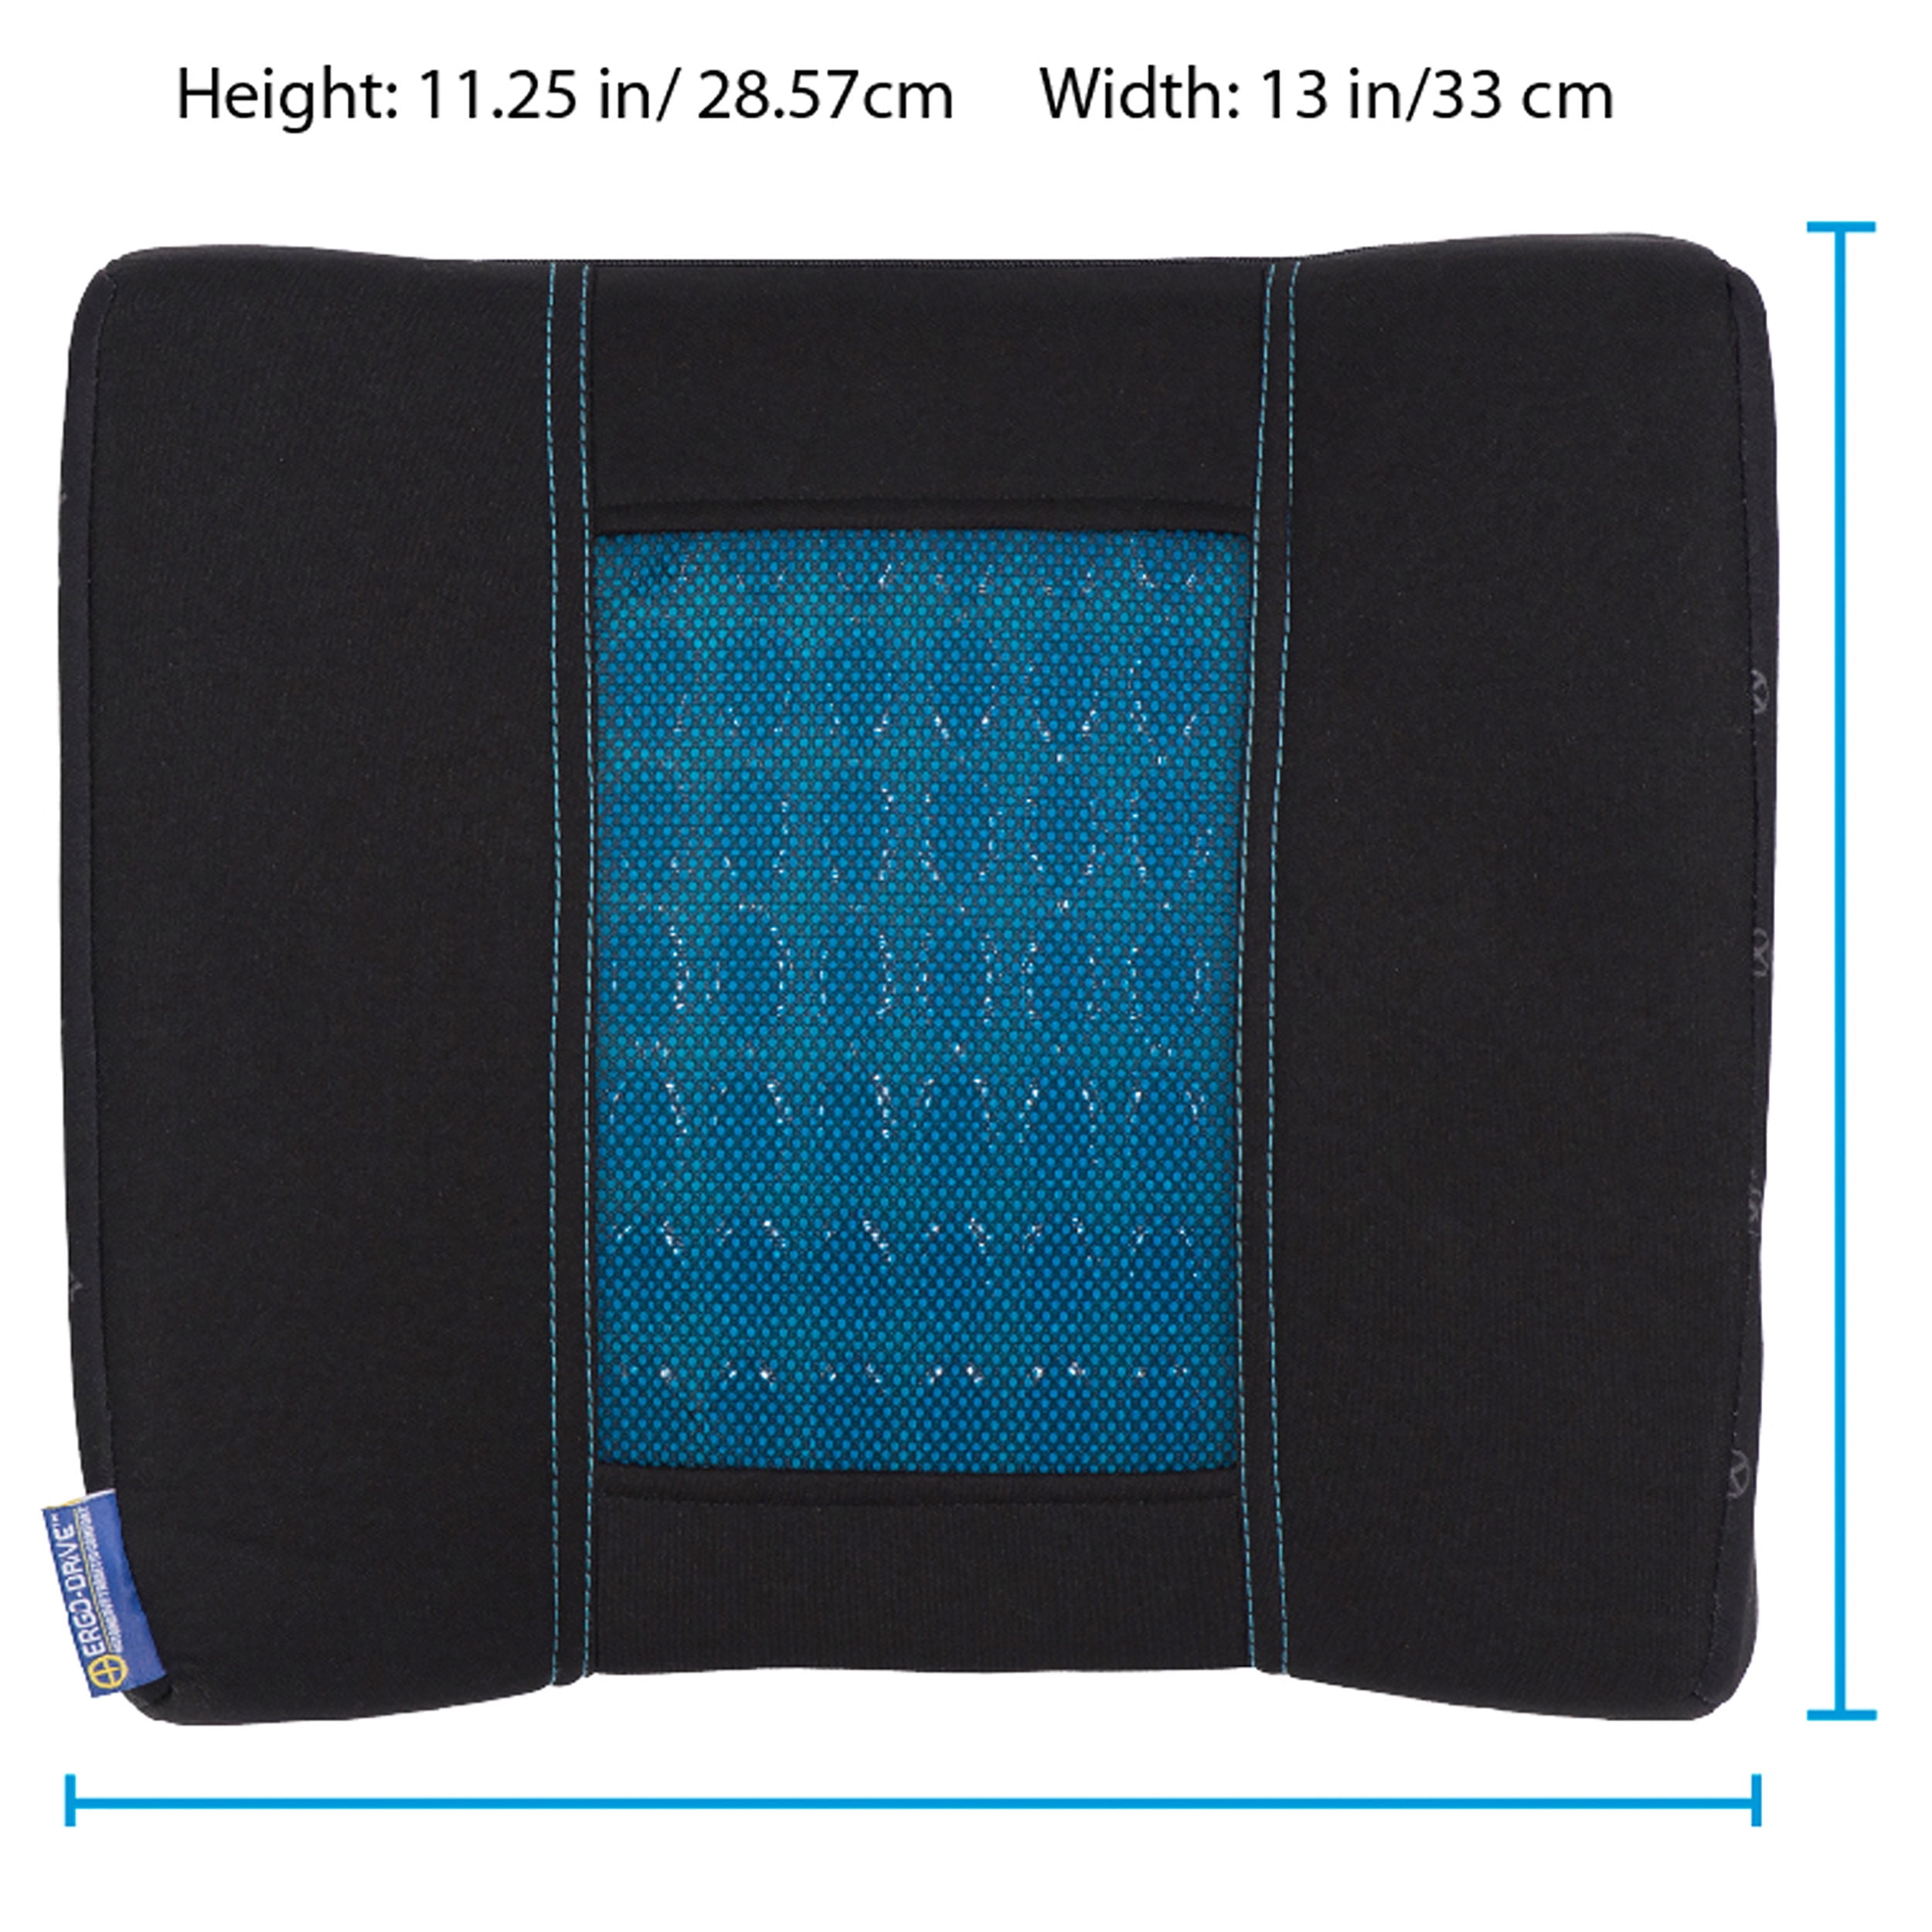 Smart Gear Cooling Memory Foam Lumbar Cushion, Black